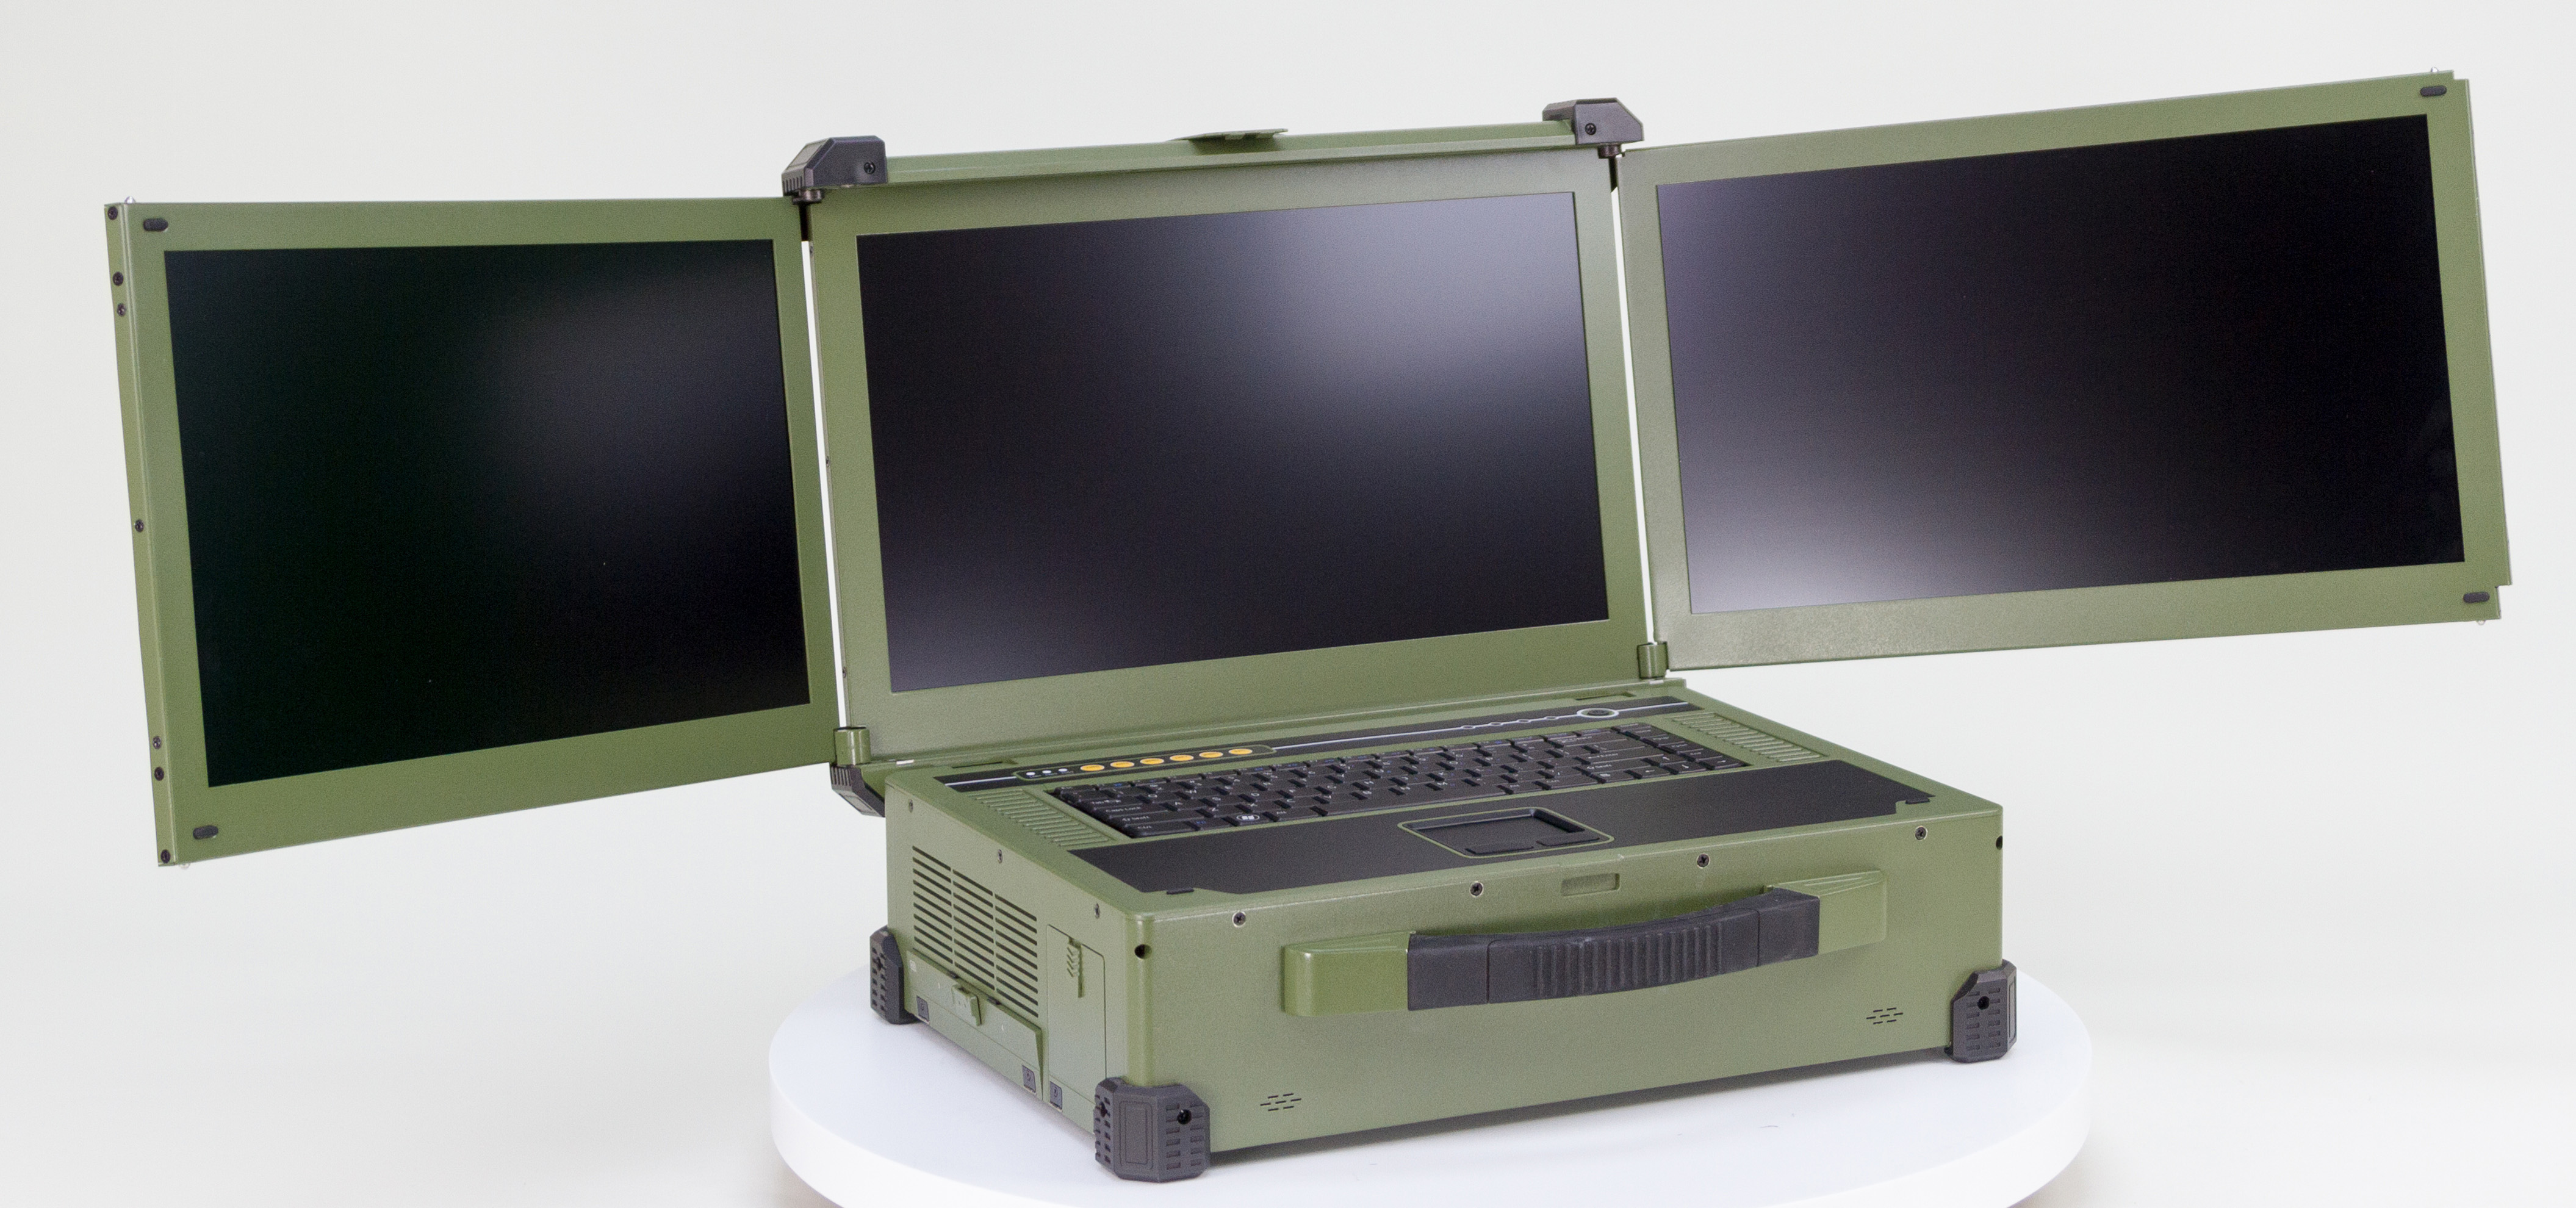 Three-screen laptop - military grade portable PCIe slots and Xeon CPU